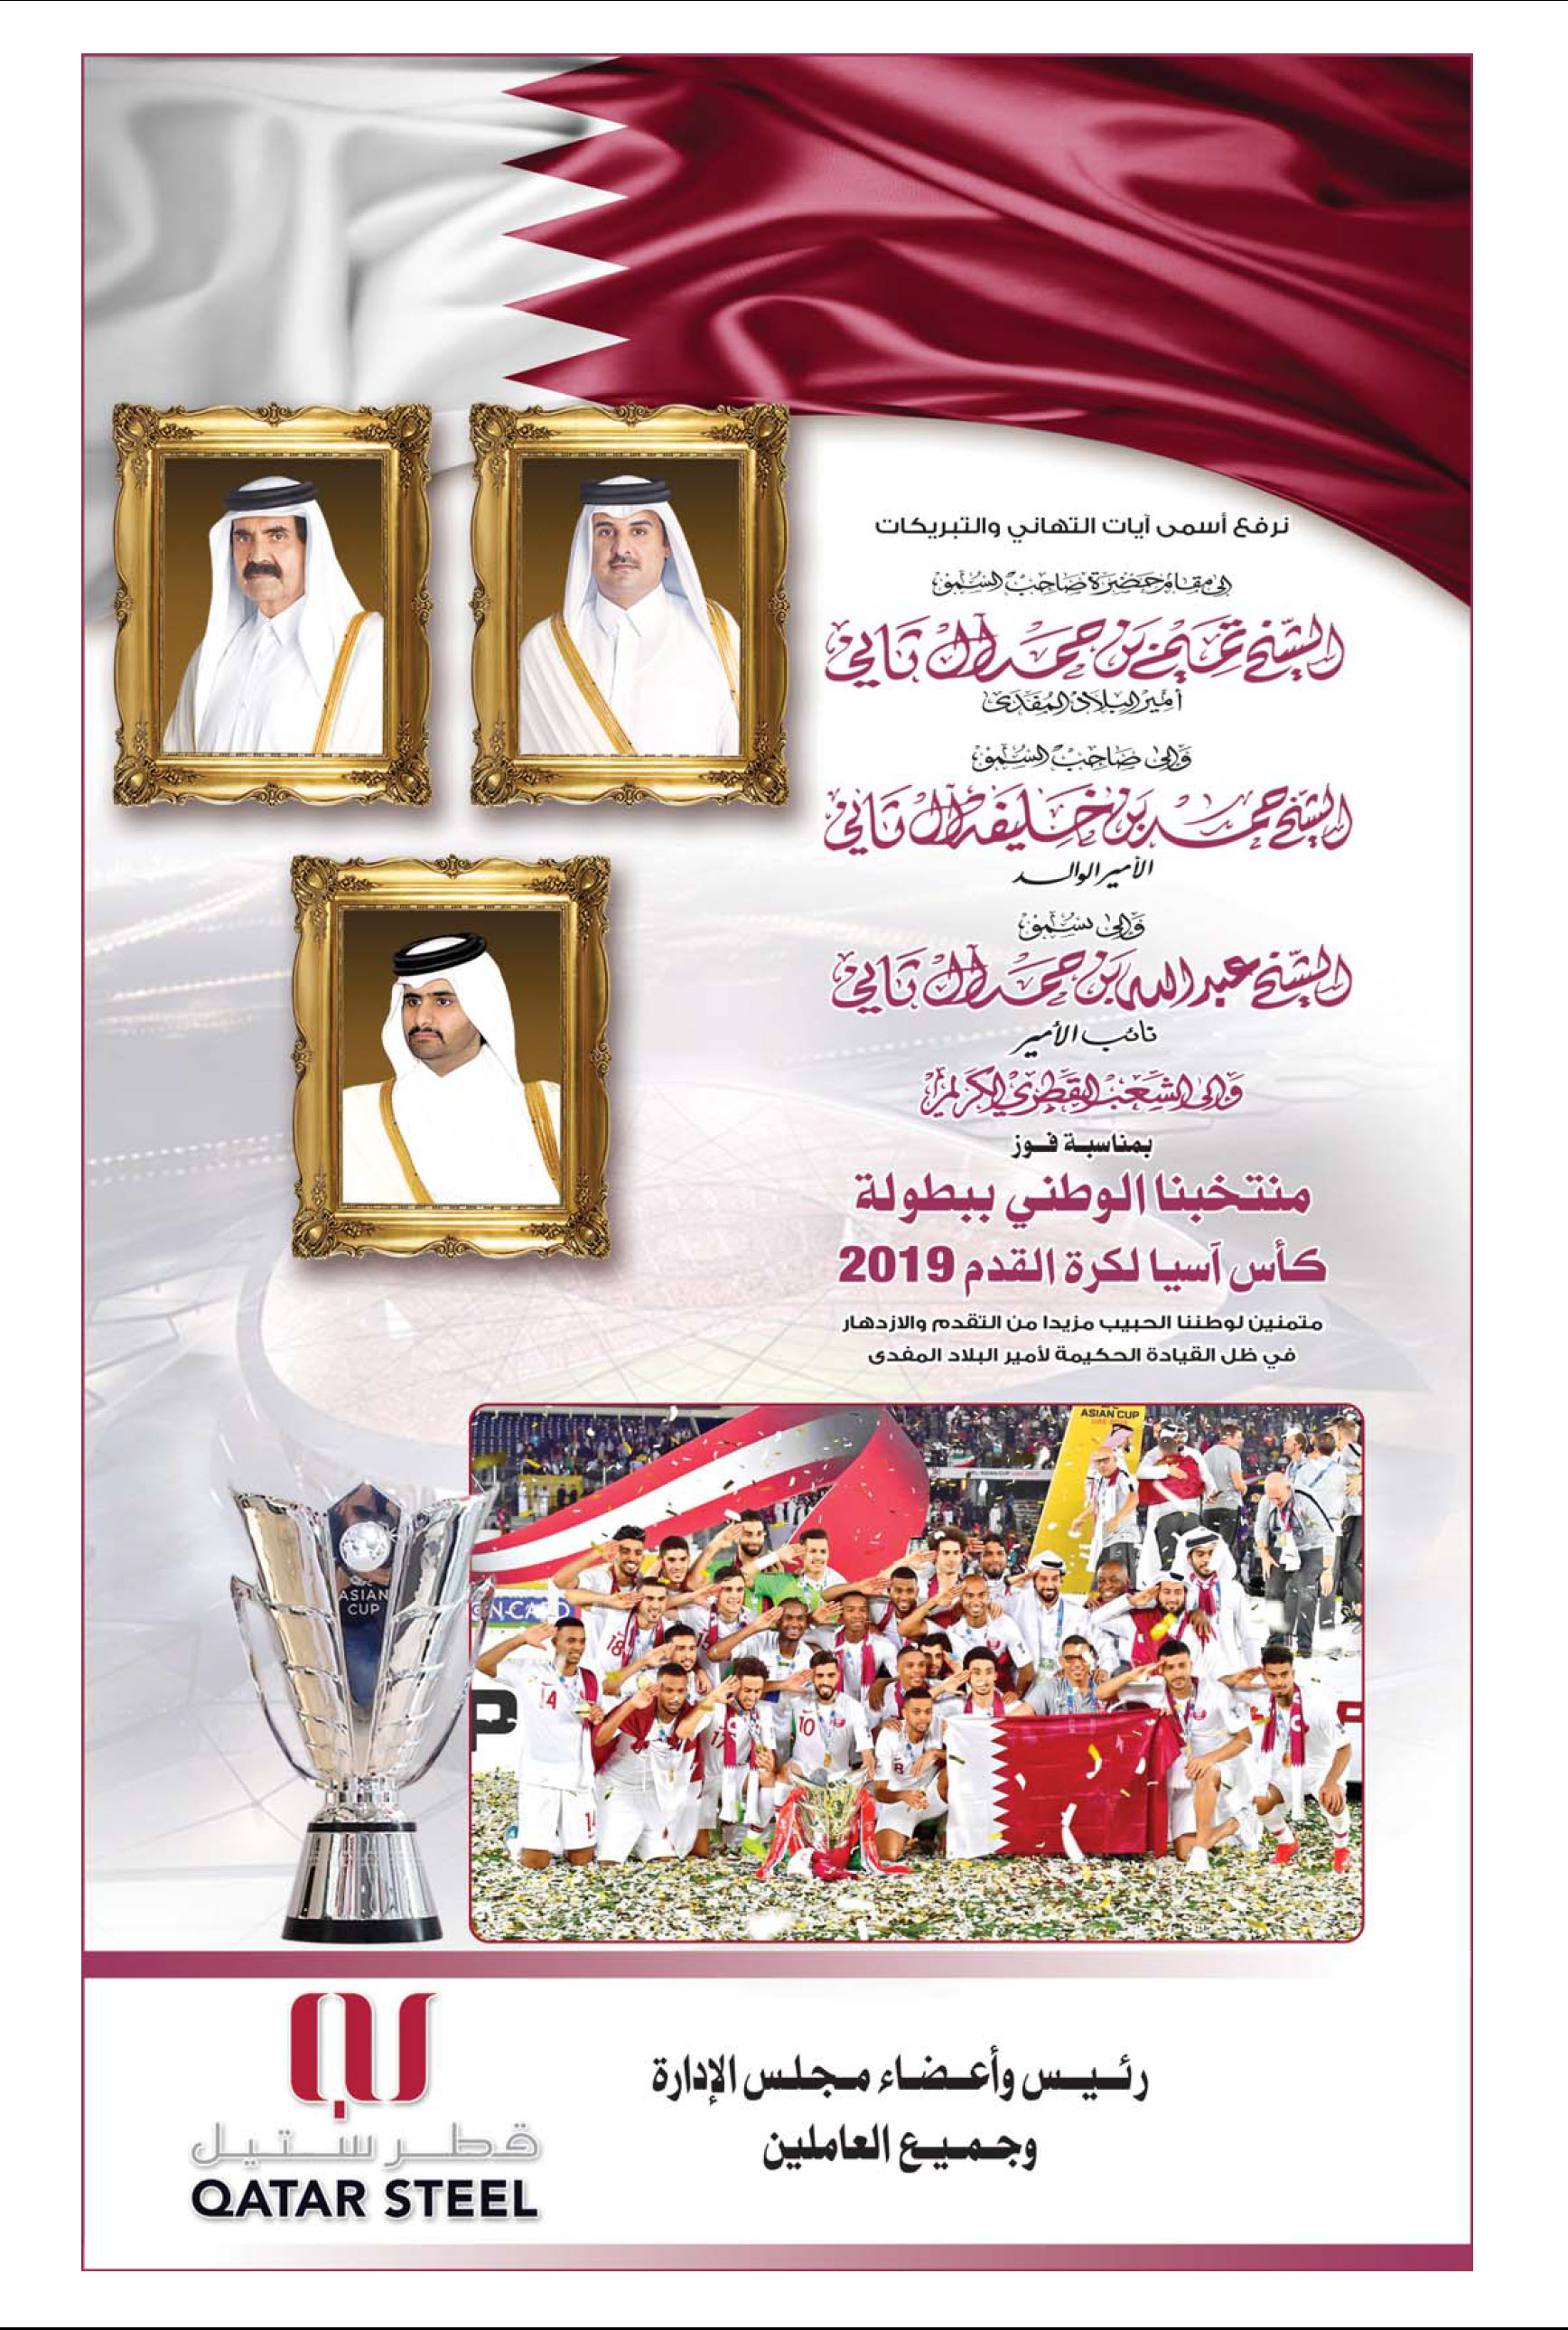 Qatar Steel Congratulation in Al Watan